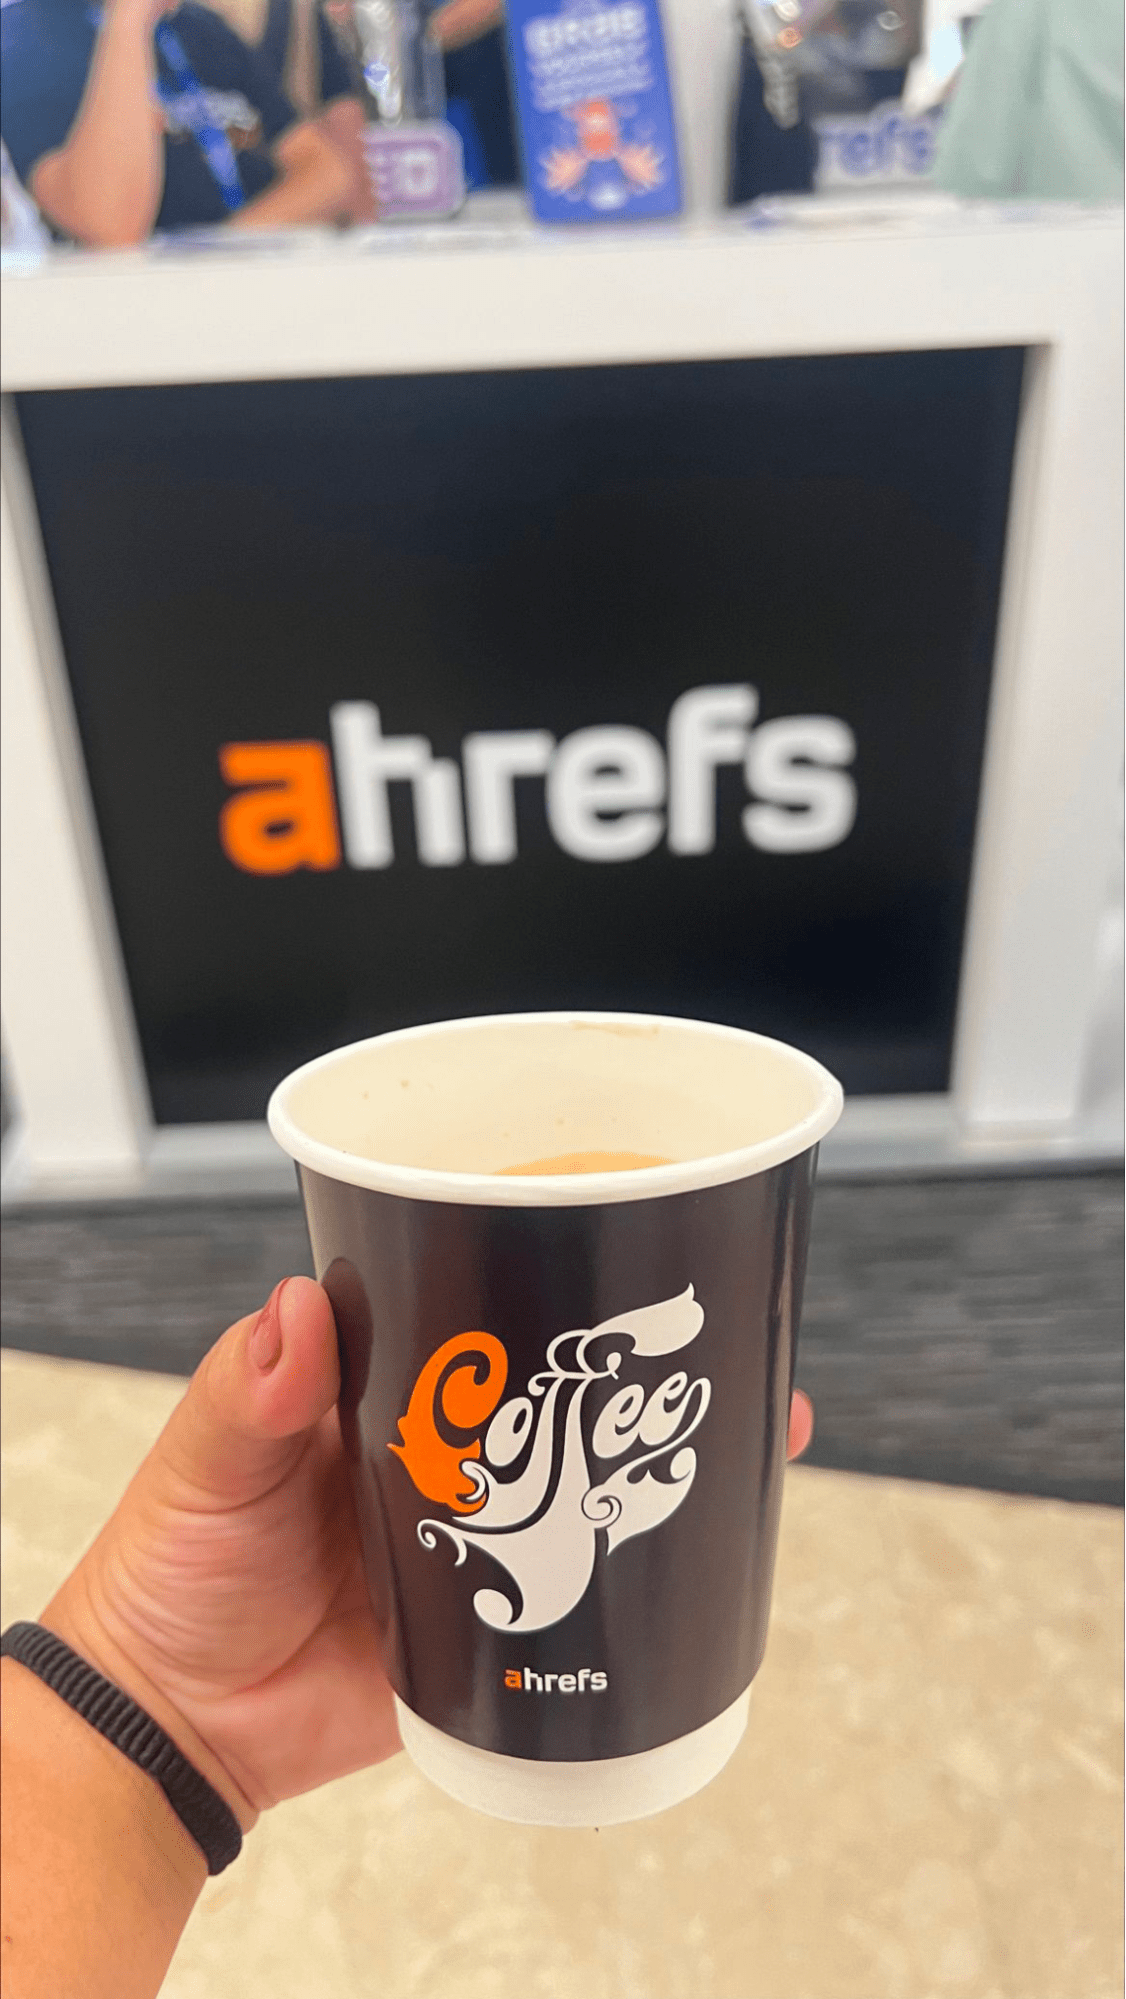 Ahrefs' coffee cup
